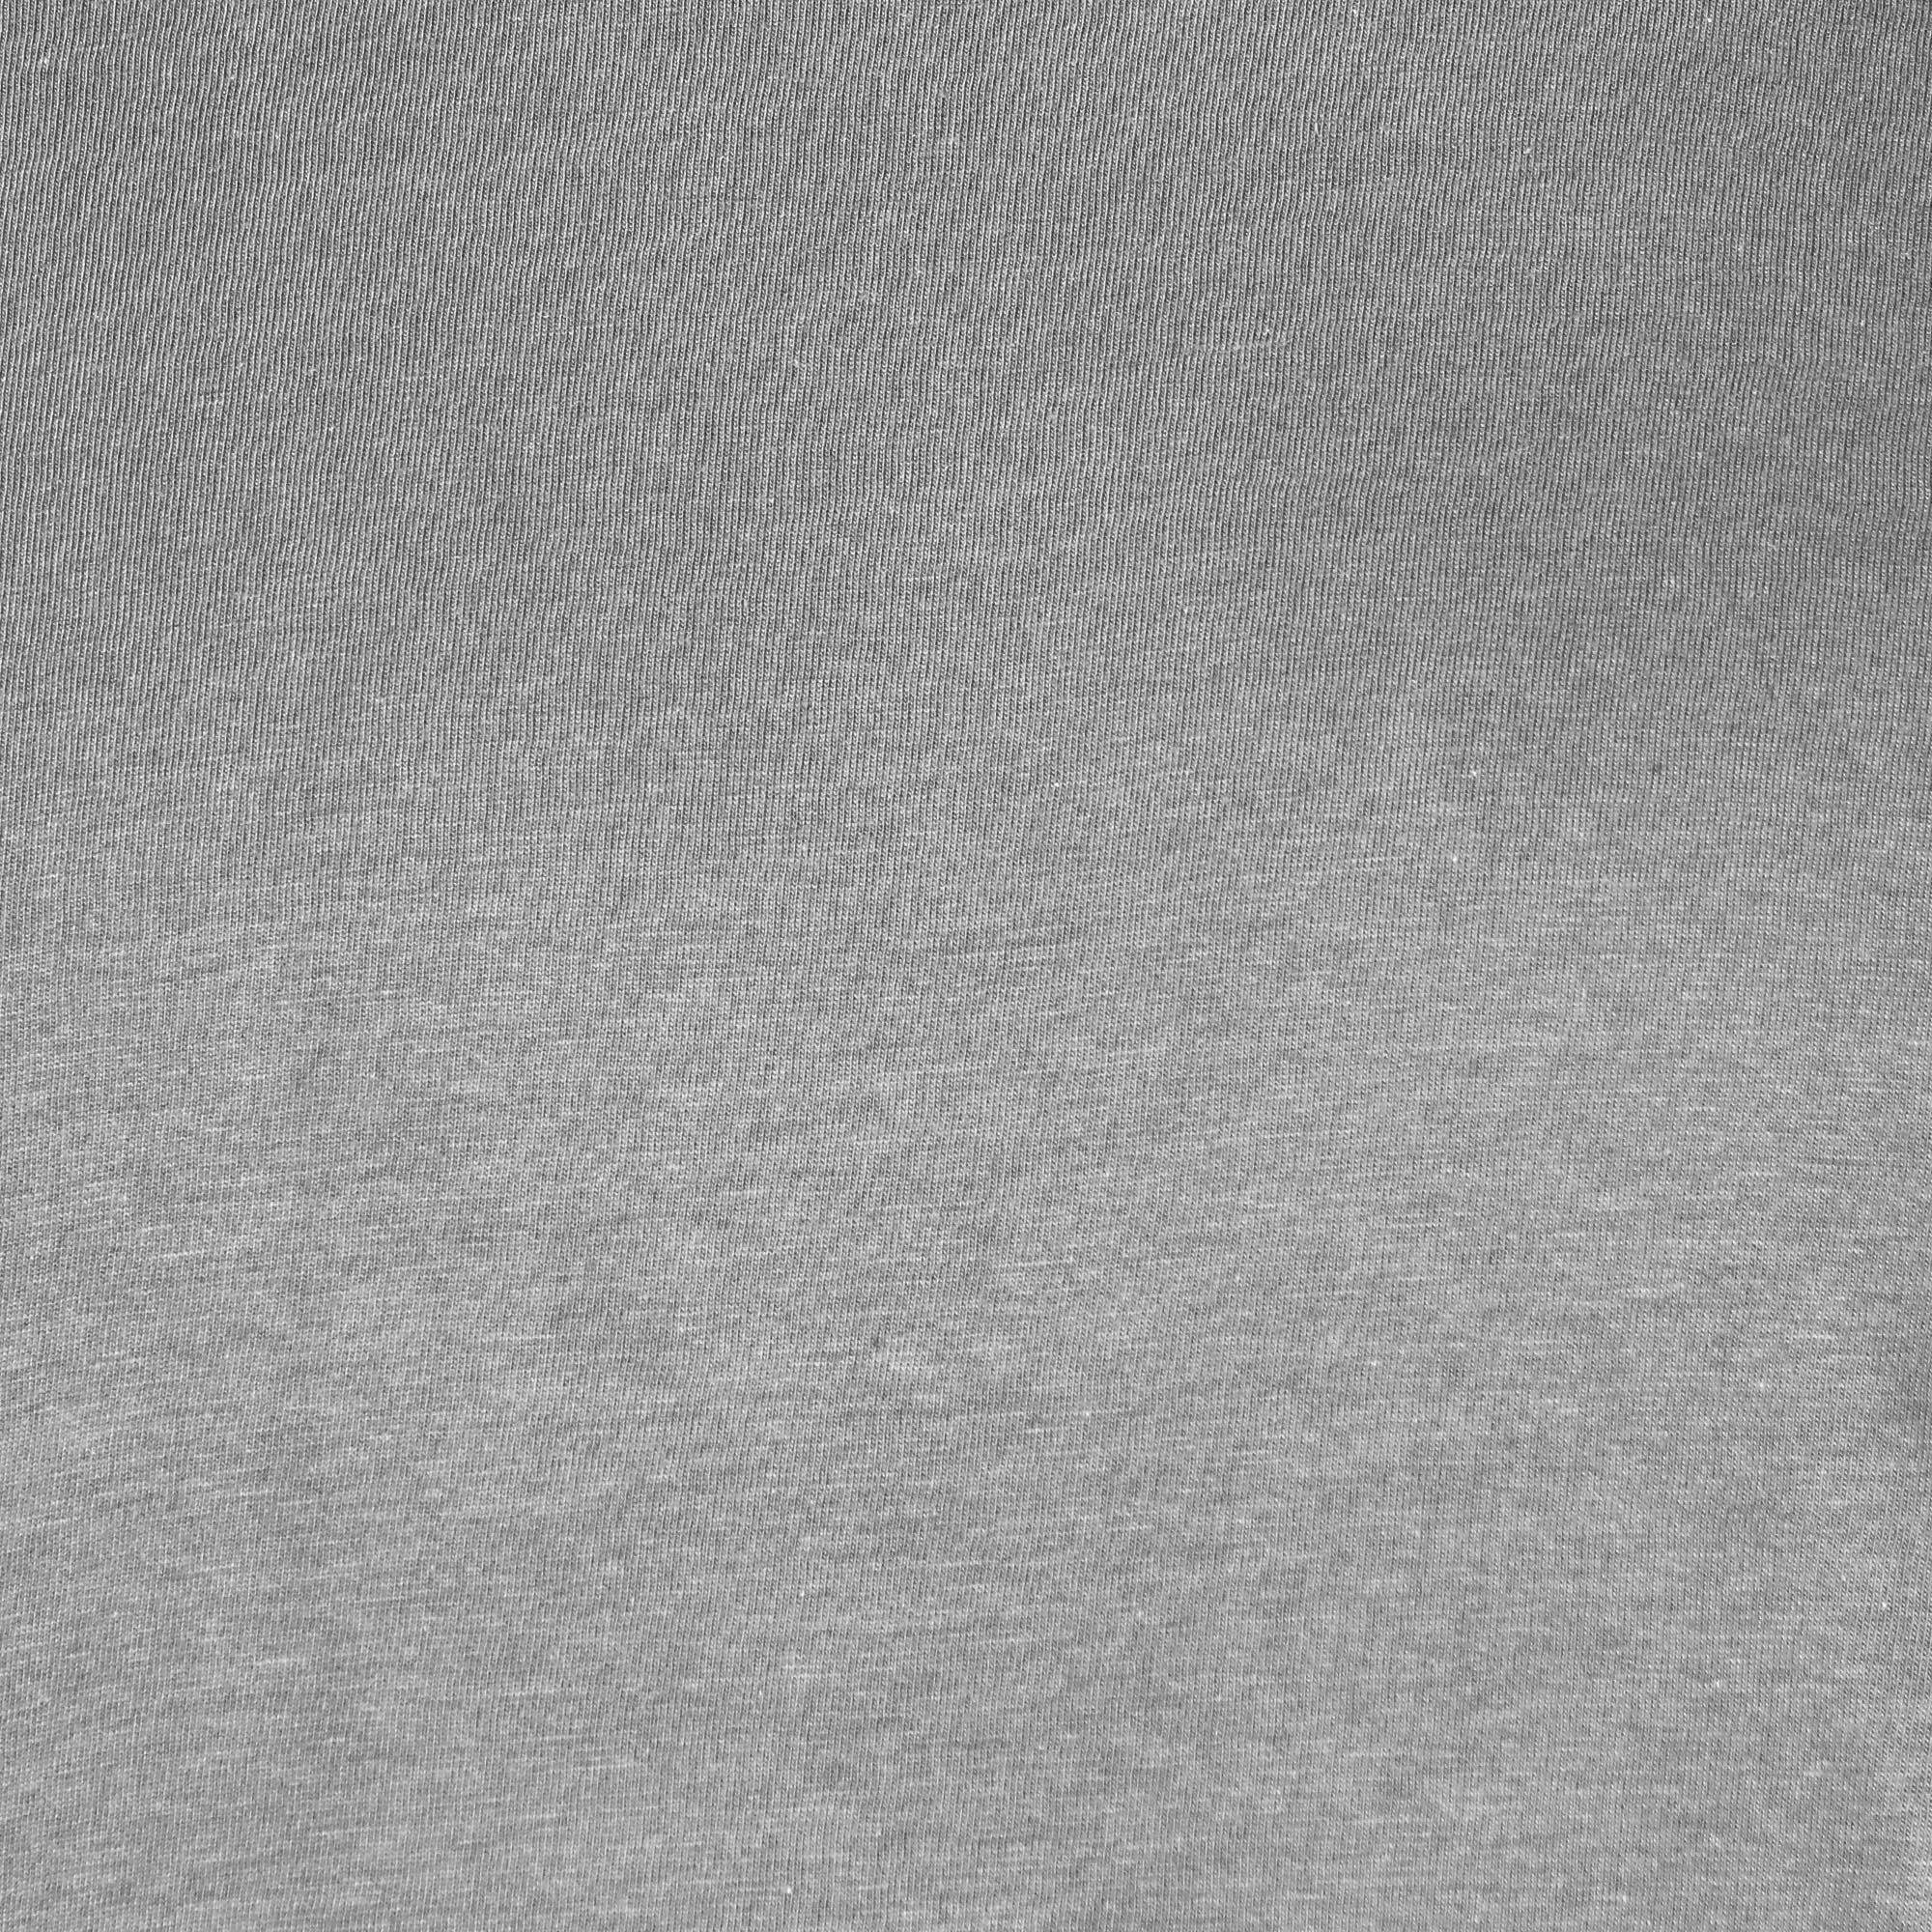 Мужская футболка Diva Teks серая (DTD-04), цвет серый, размер 46-48 - фото 5